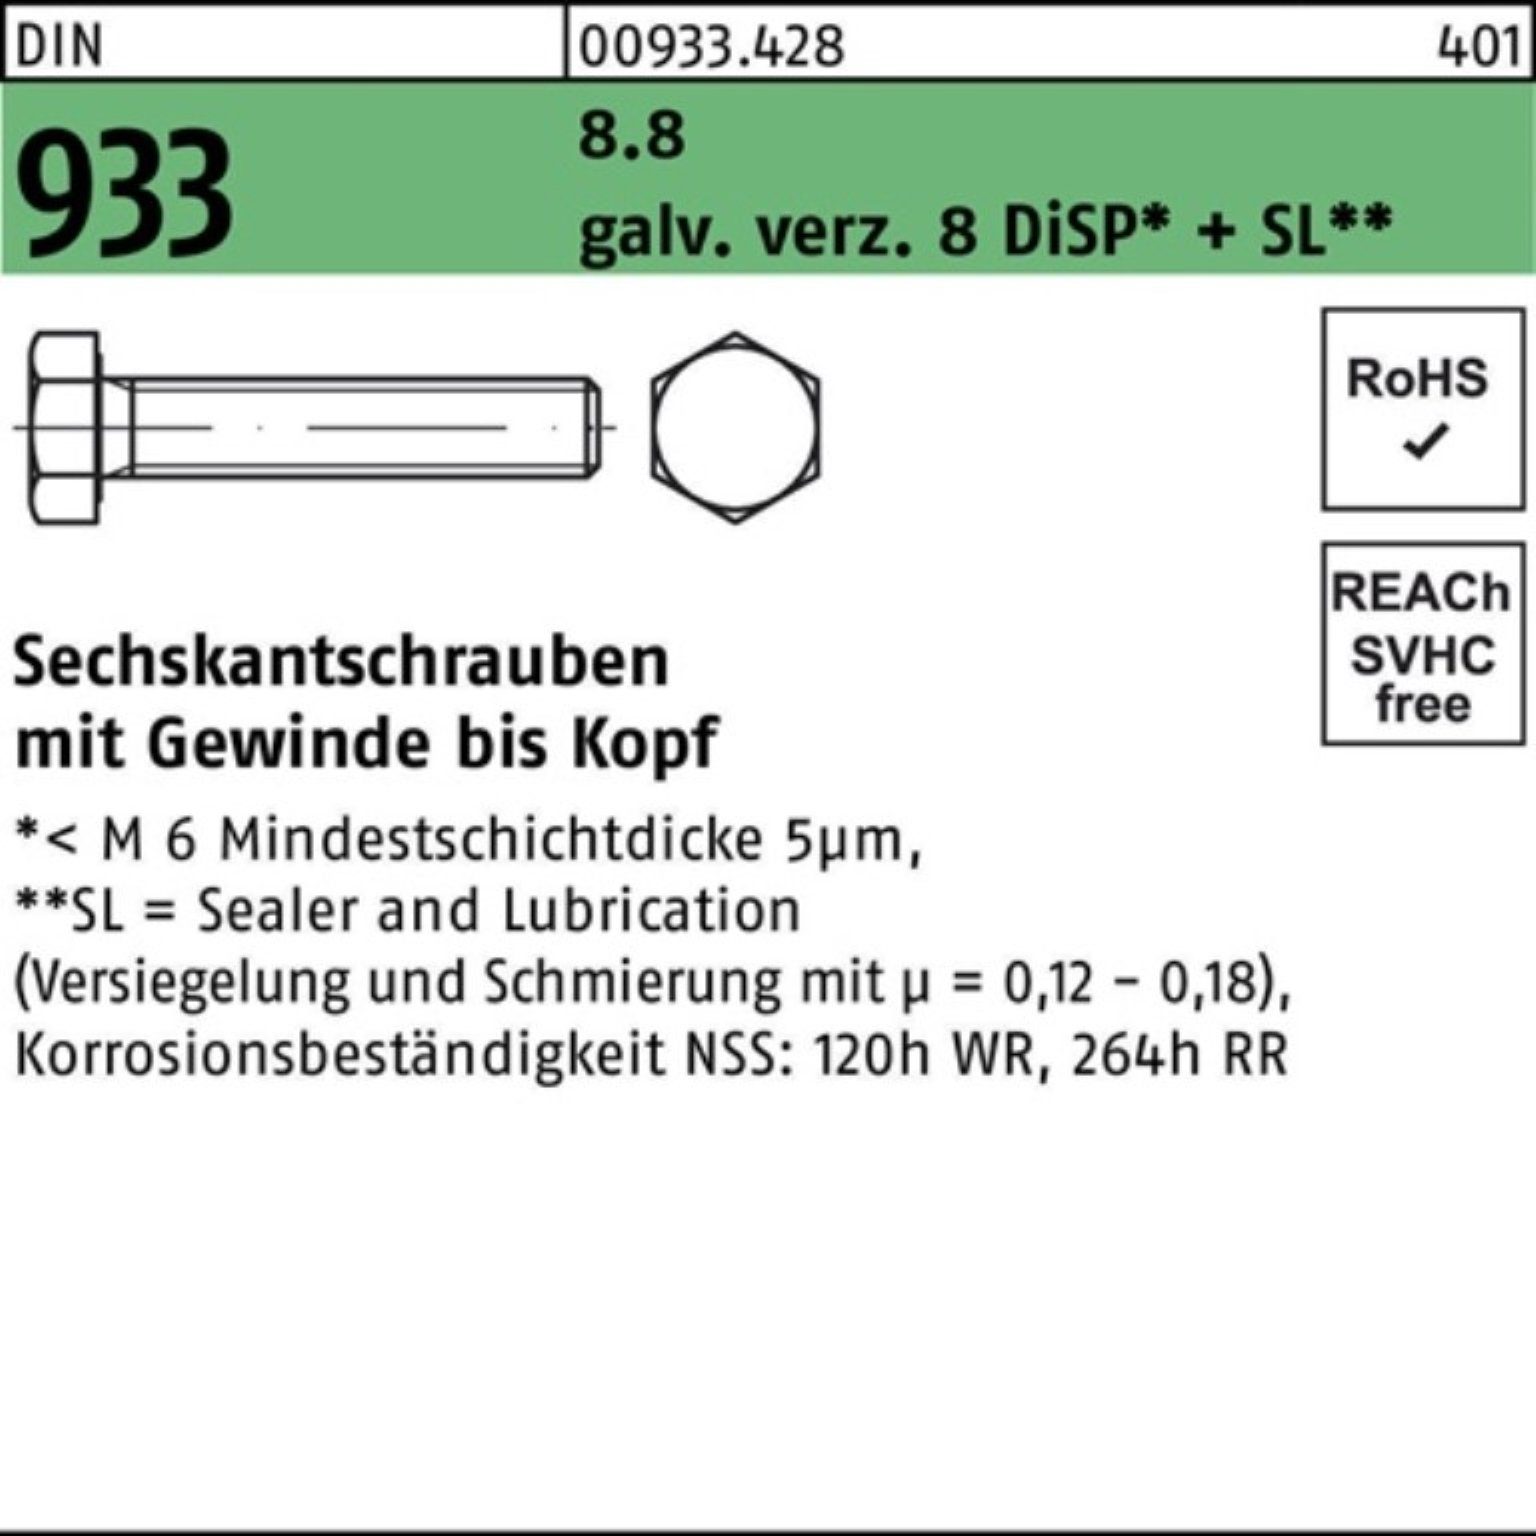 VG + 500er 933 Sechskantschraube SL Reyher M3x gal DIN 20 DiSP Zn Pack 50 8.8 Sechskantschraube